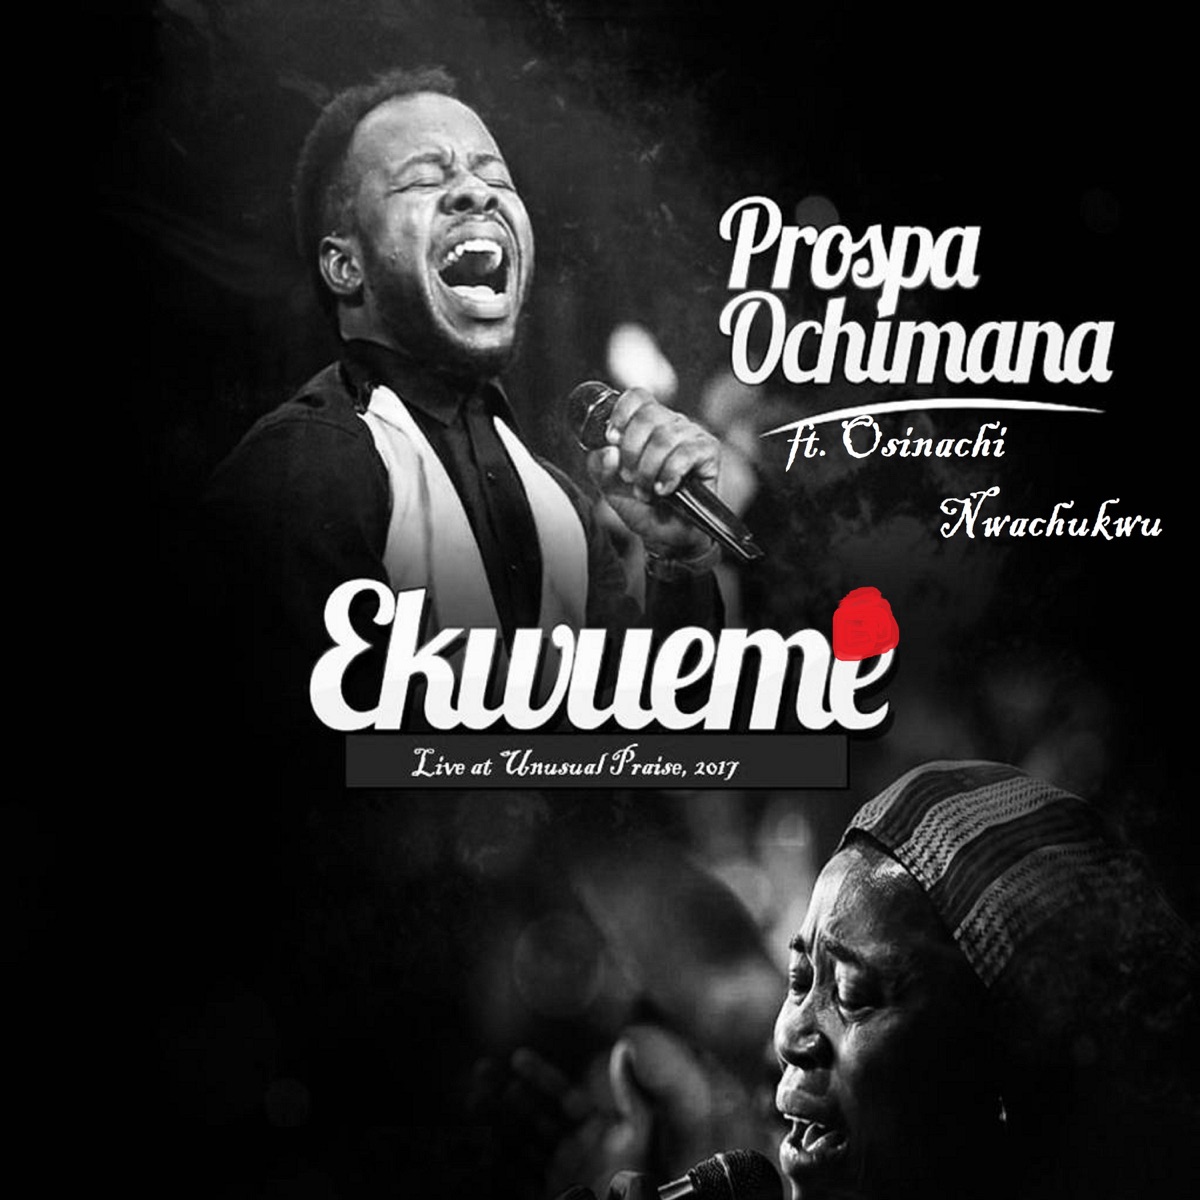 Ekwueme (feat. Osinachi Nwachukwu) [Live at Unusual Praise, 2017] - Single  par Prospa Ochimana sur Apple Music